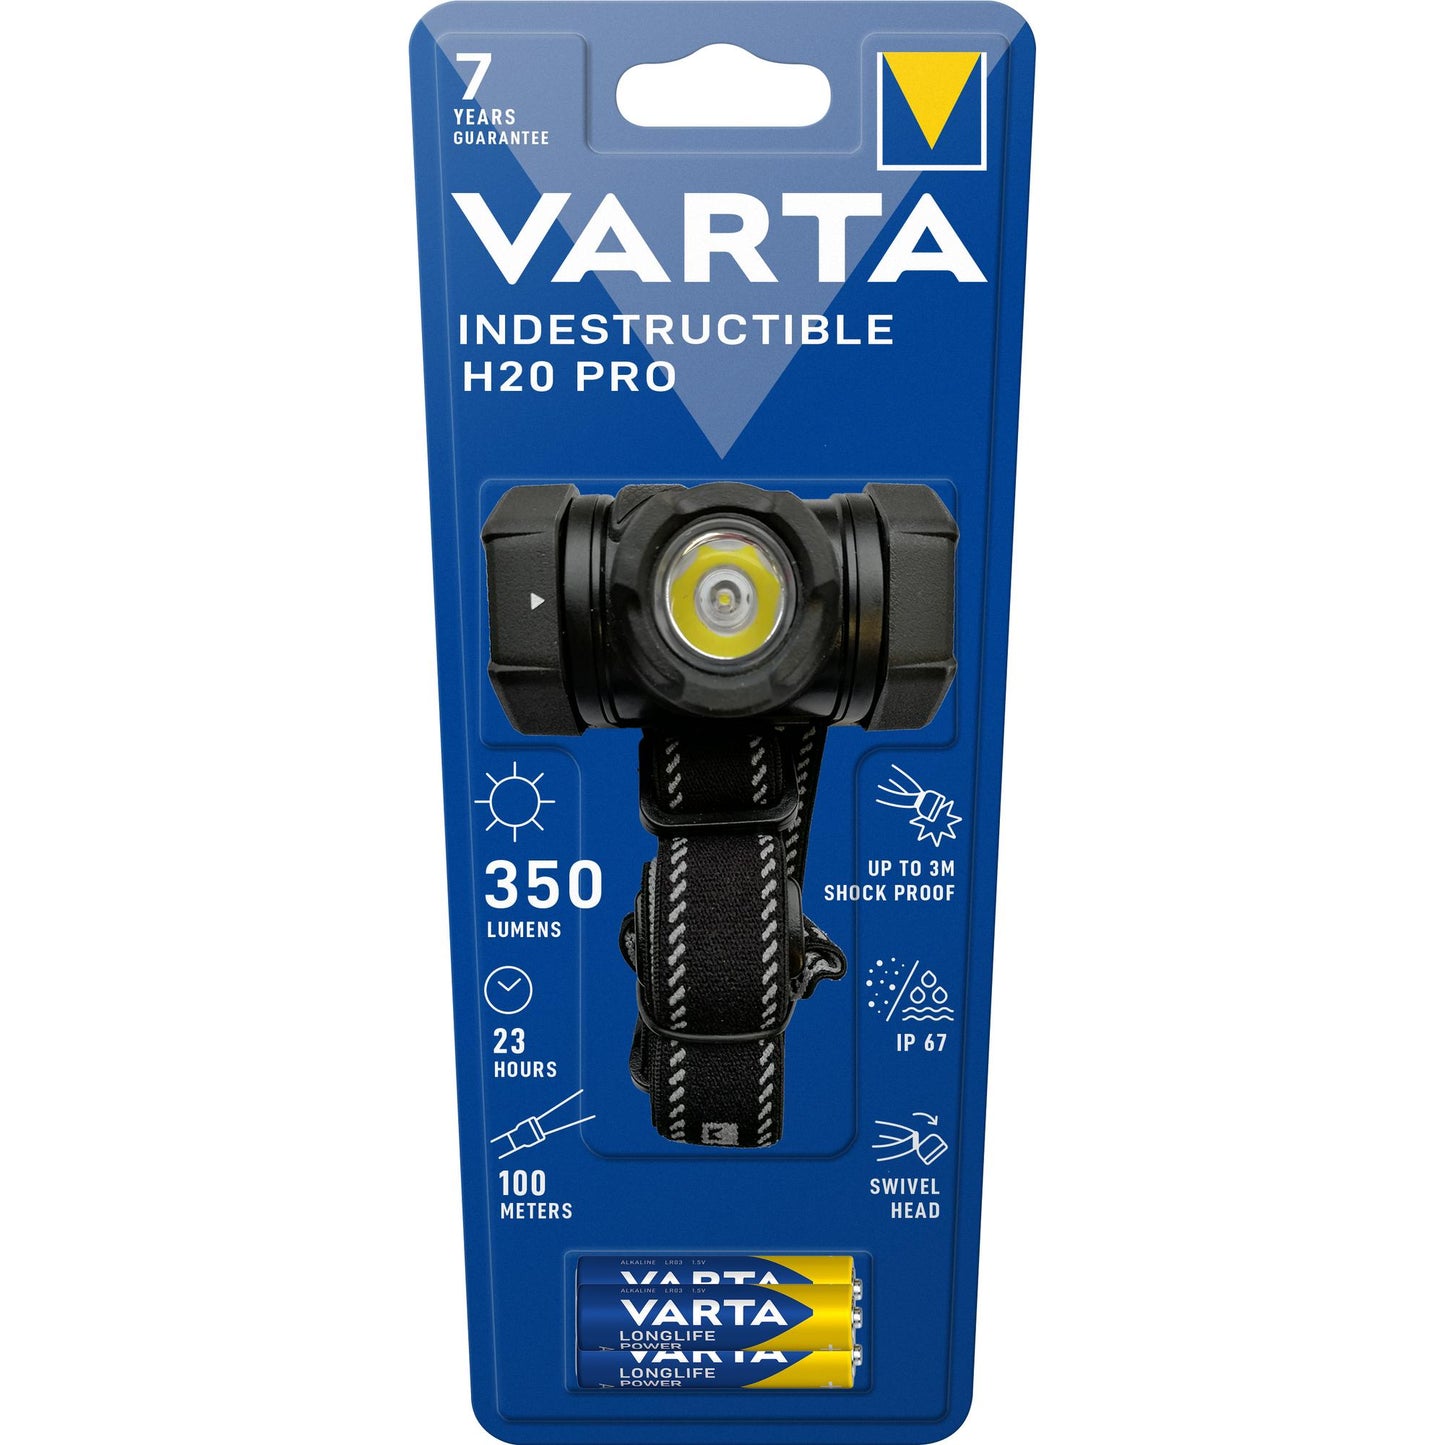 VARTA LED Taschenlampe Indestructible H20 Pro, 350lm inkl. 3x AAA Alkaline Batterie, Retail Blister